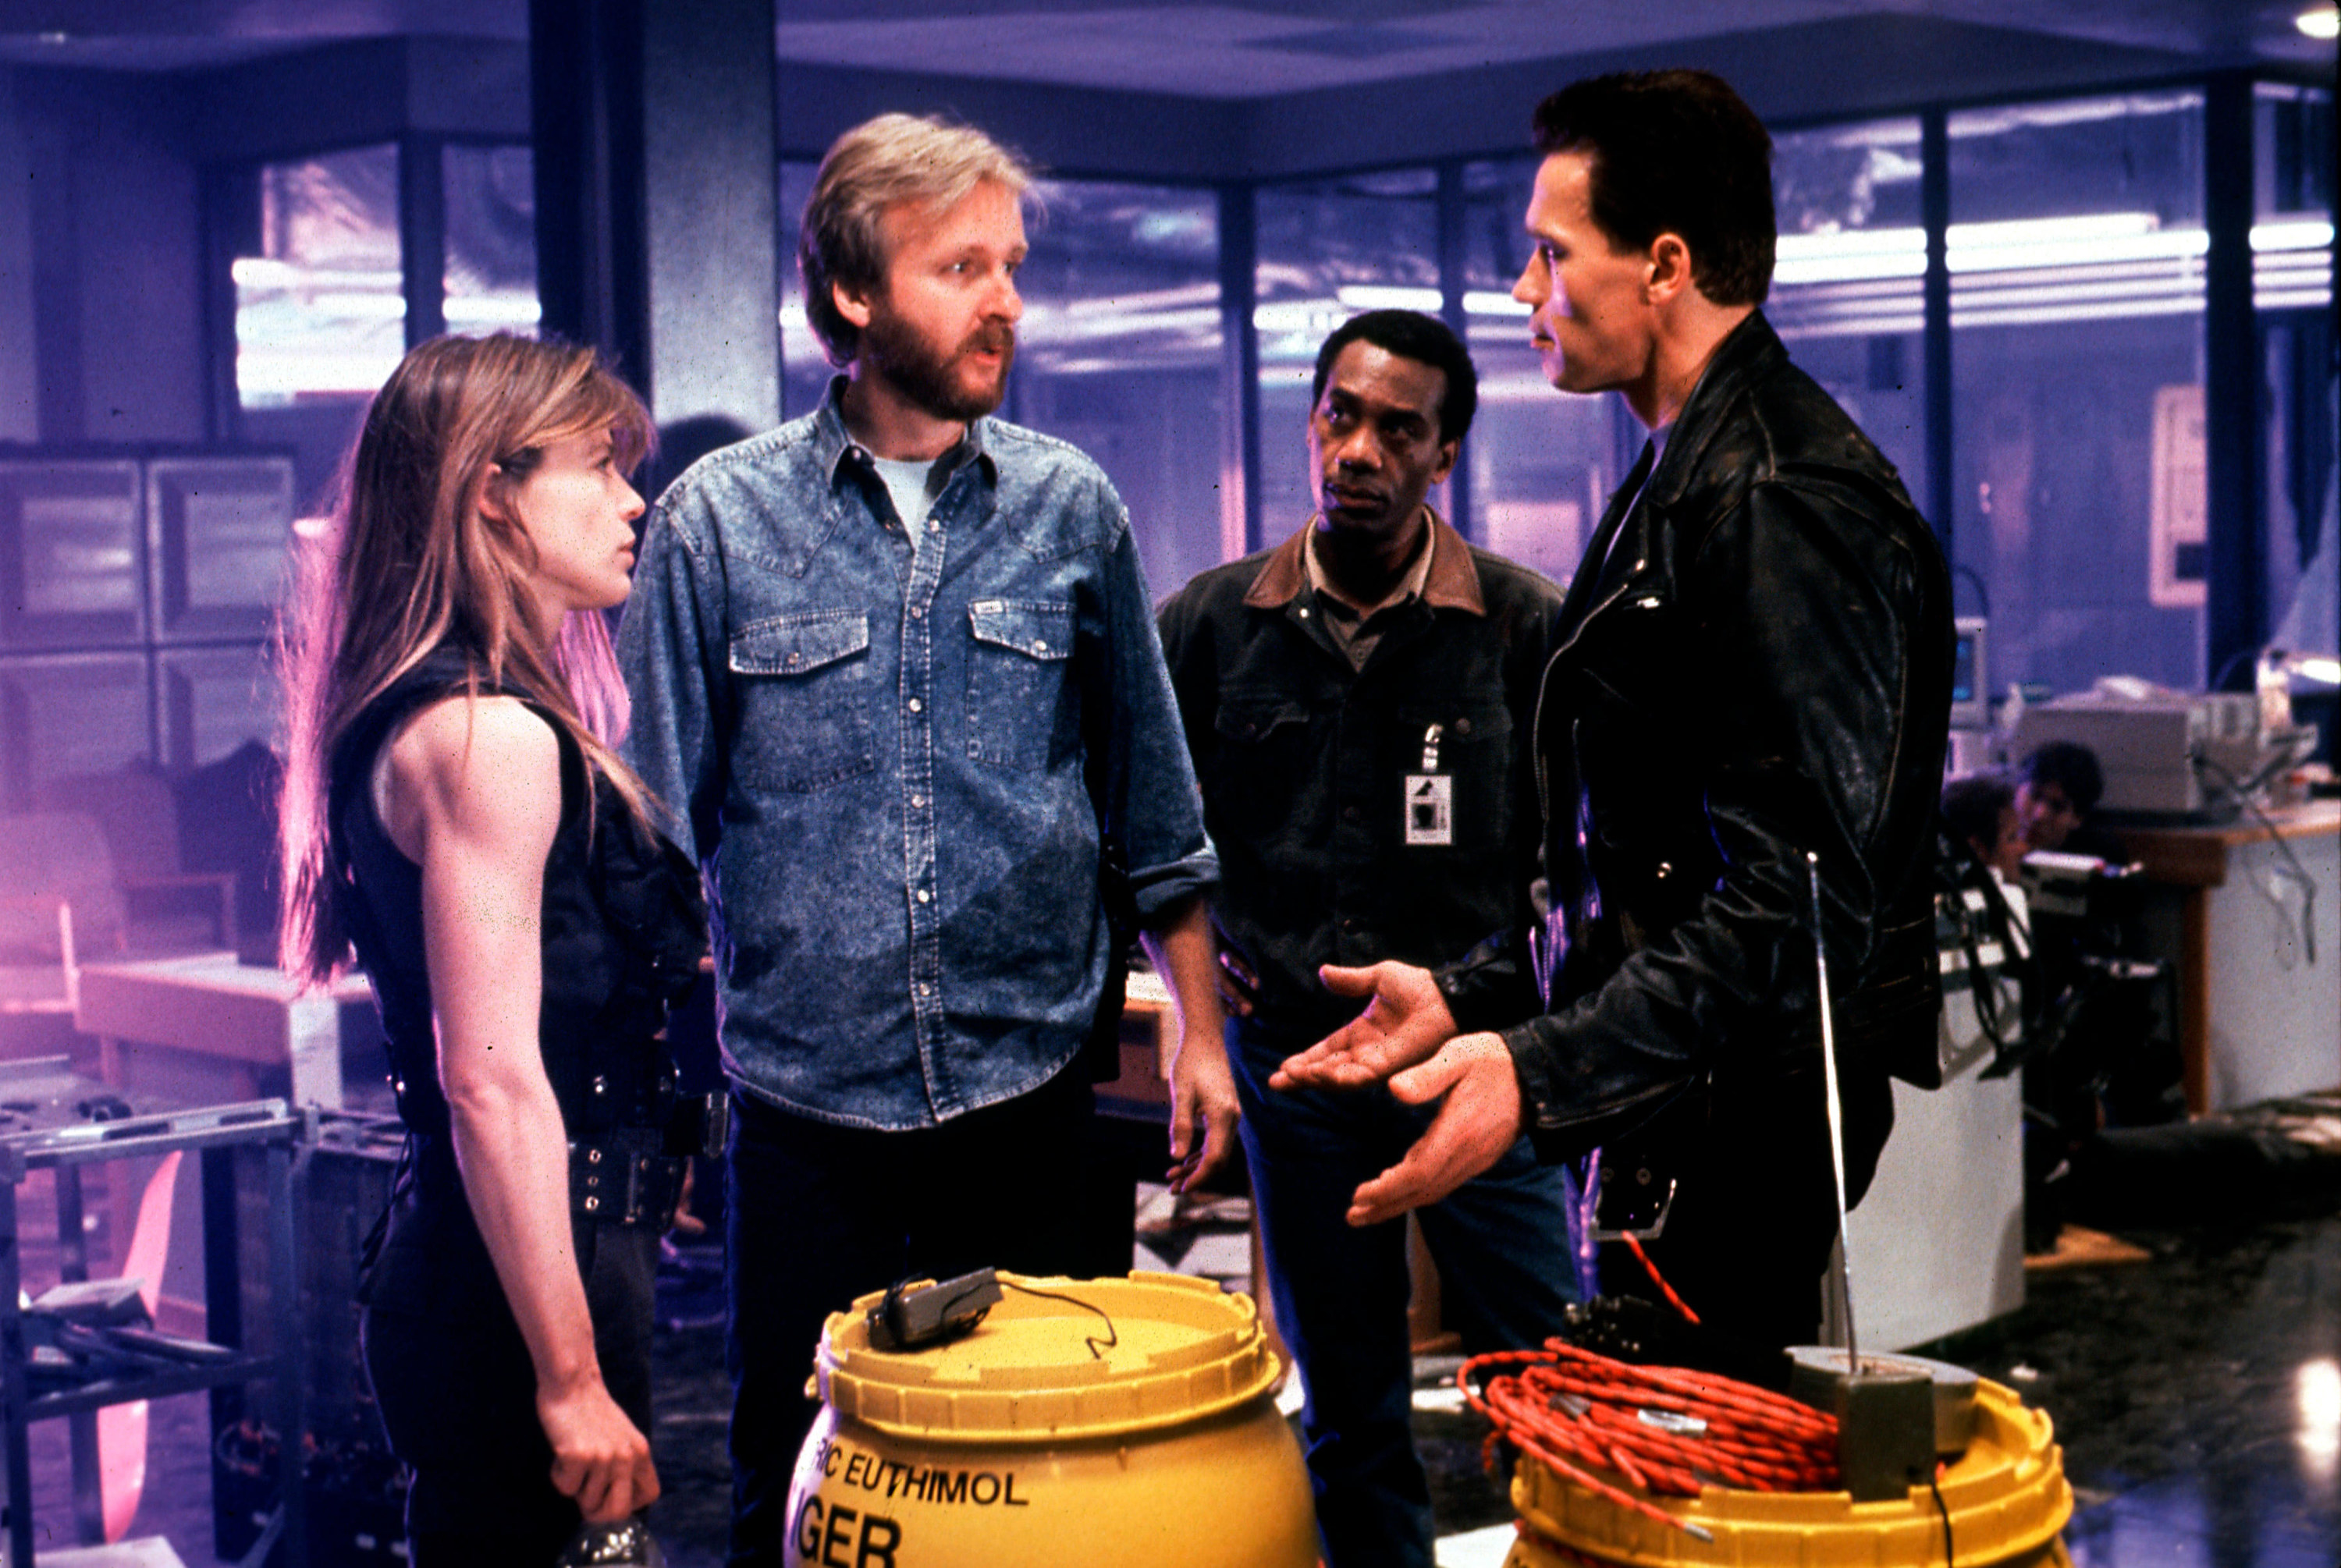 Linda Hamilton, Director James Cameron, Joe Morton, and Arnold Schwarzenegger on the set of “Terminator 2: Judgment Day”